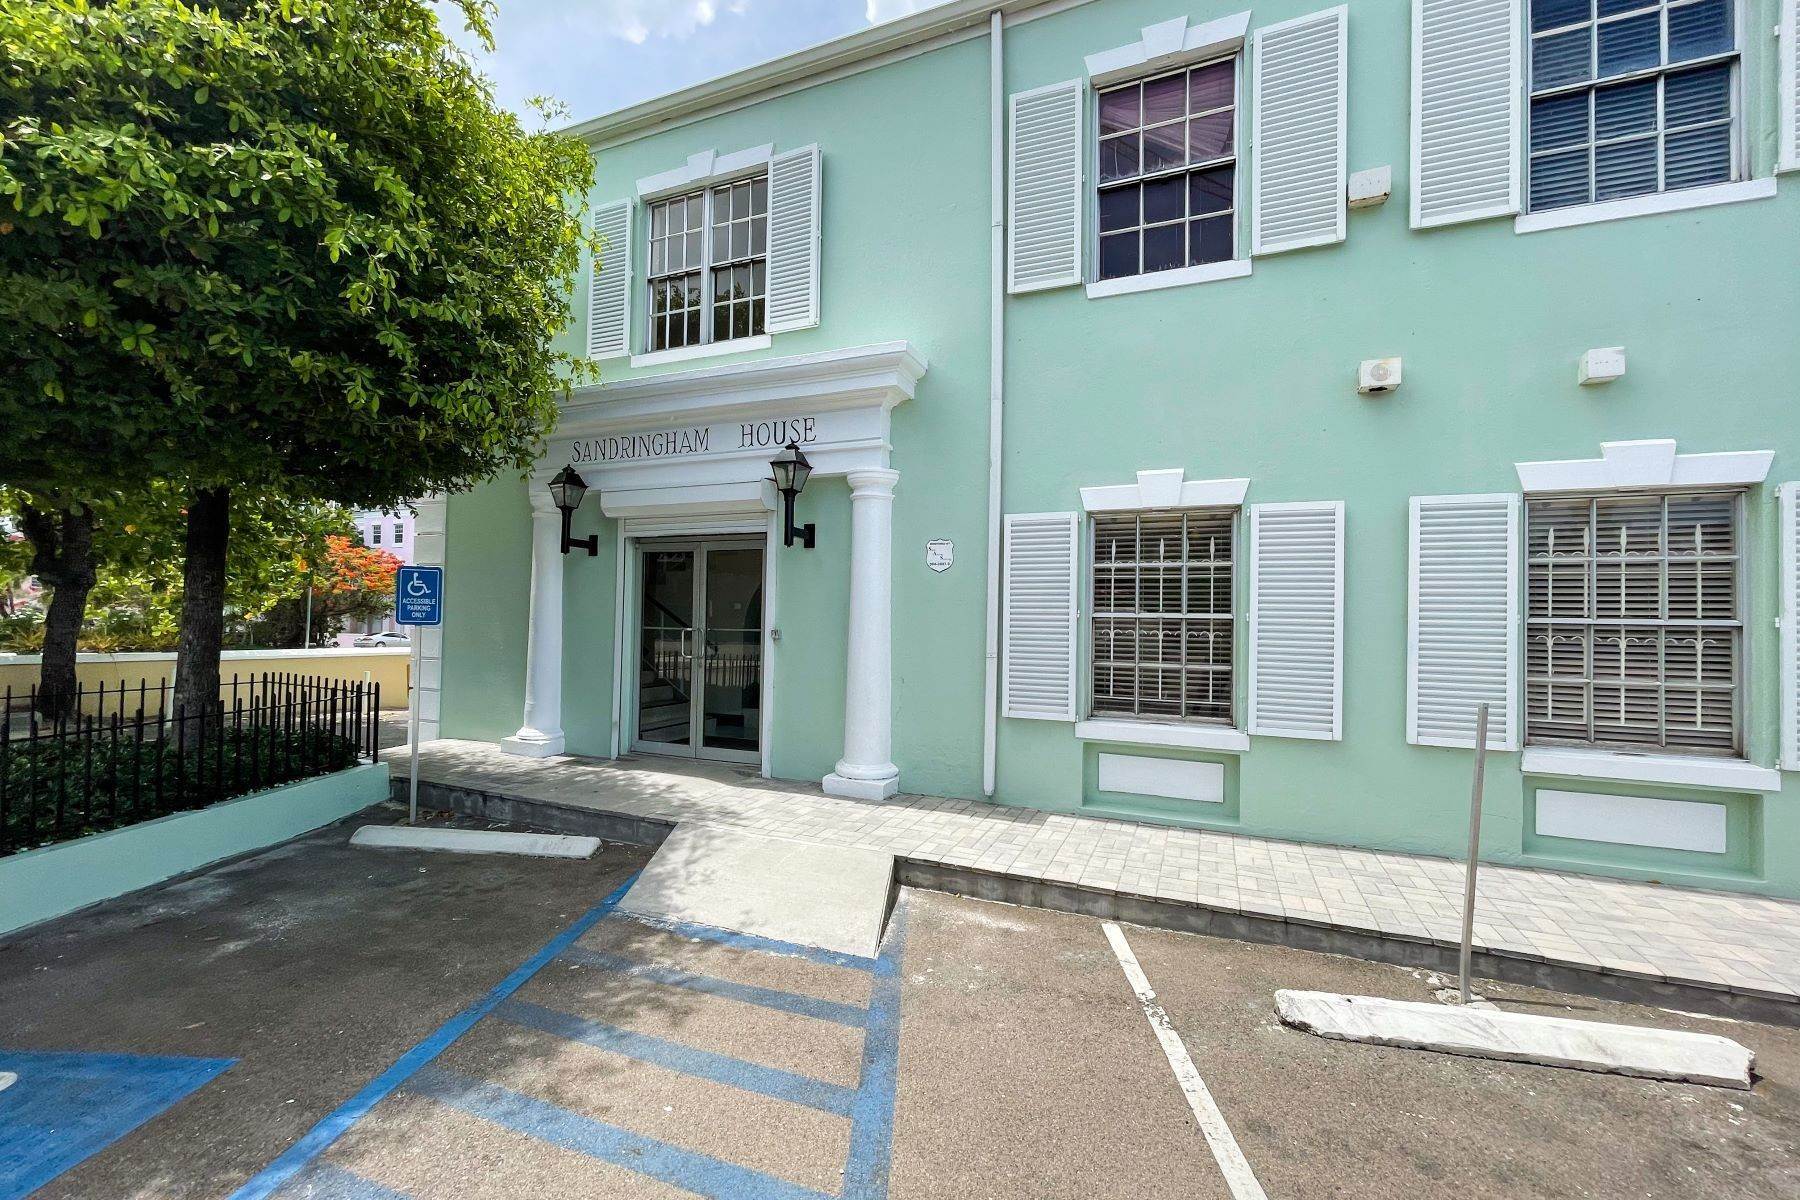 5. Commercial à Sandringham House, Entire 1st Floor Downtown, New Providence/Nassau, Bahamas